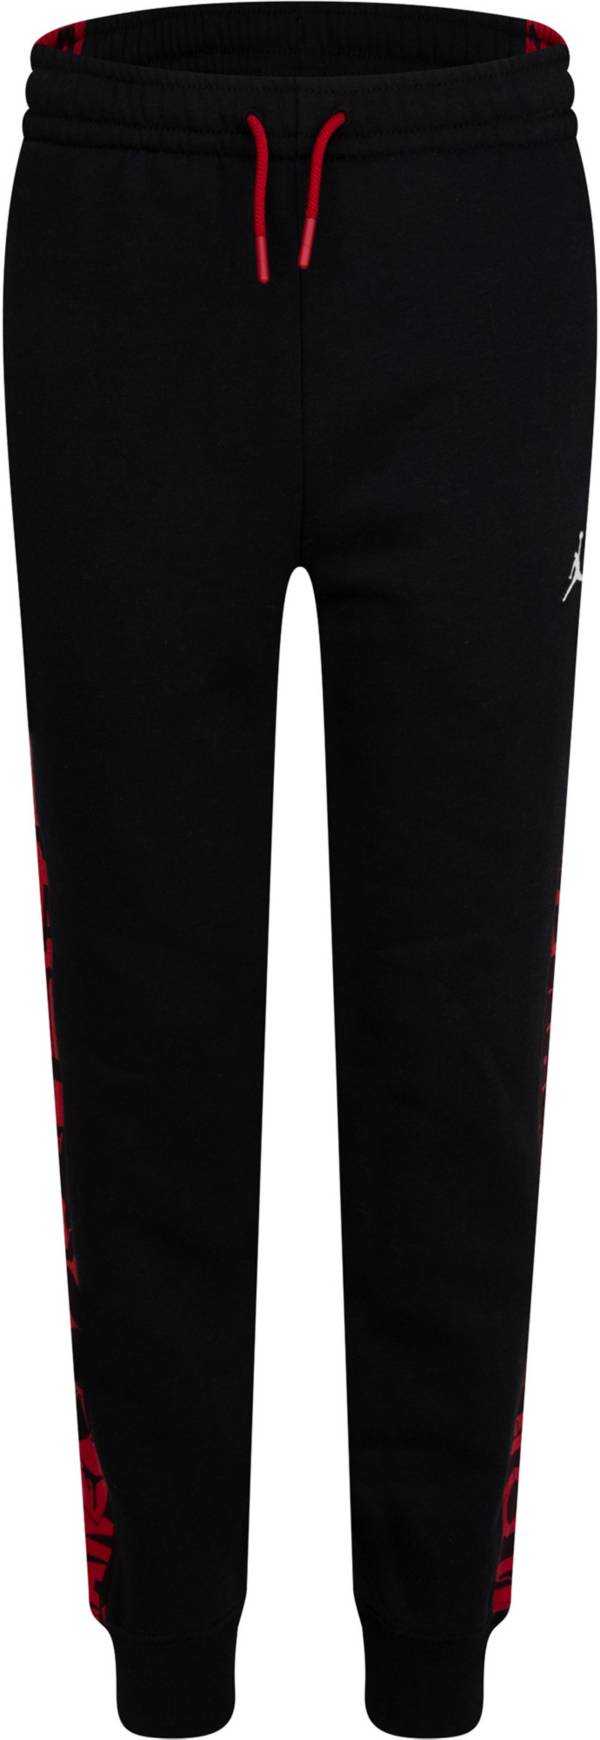 Jordan Boys' Essentials Allover Print Pants product image